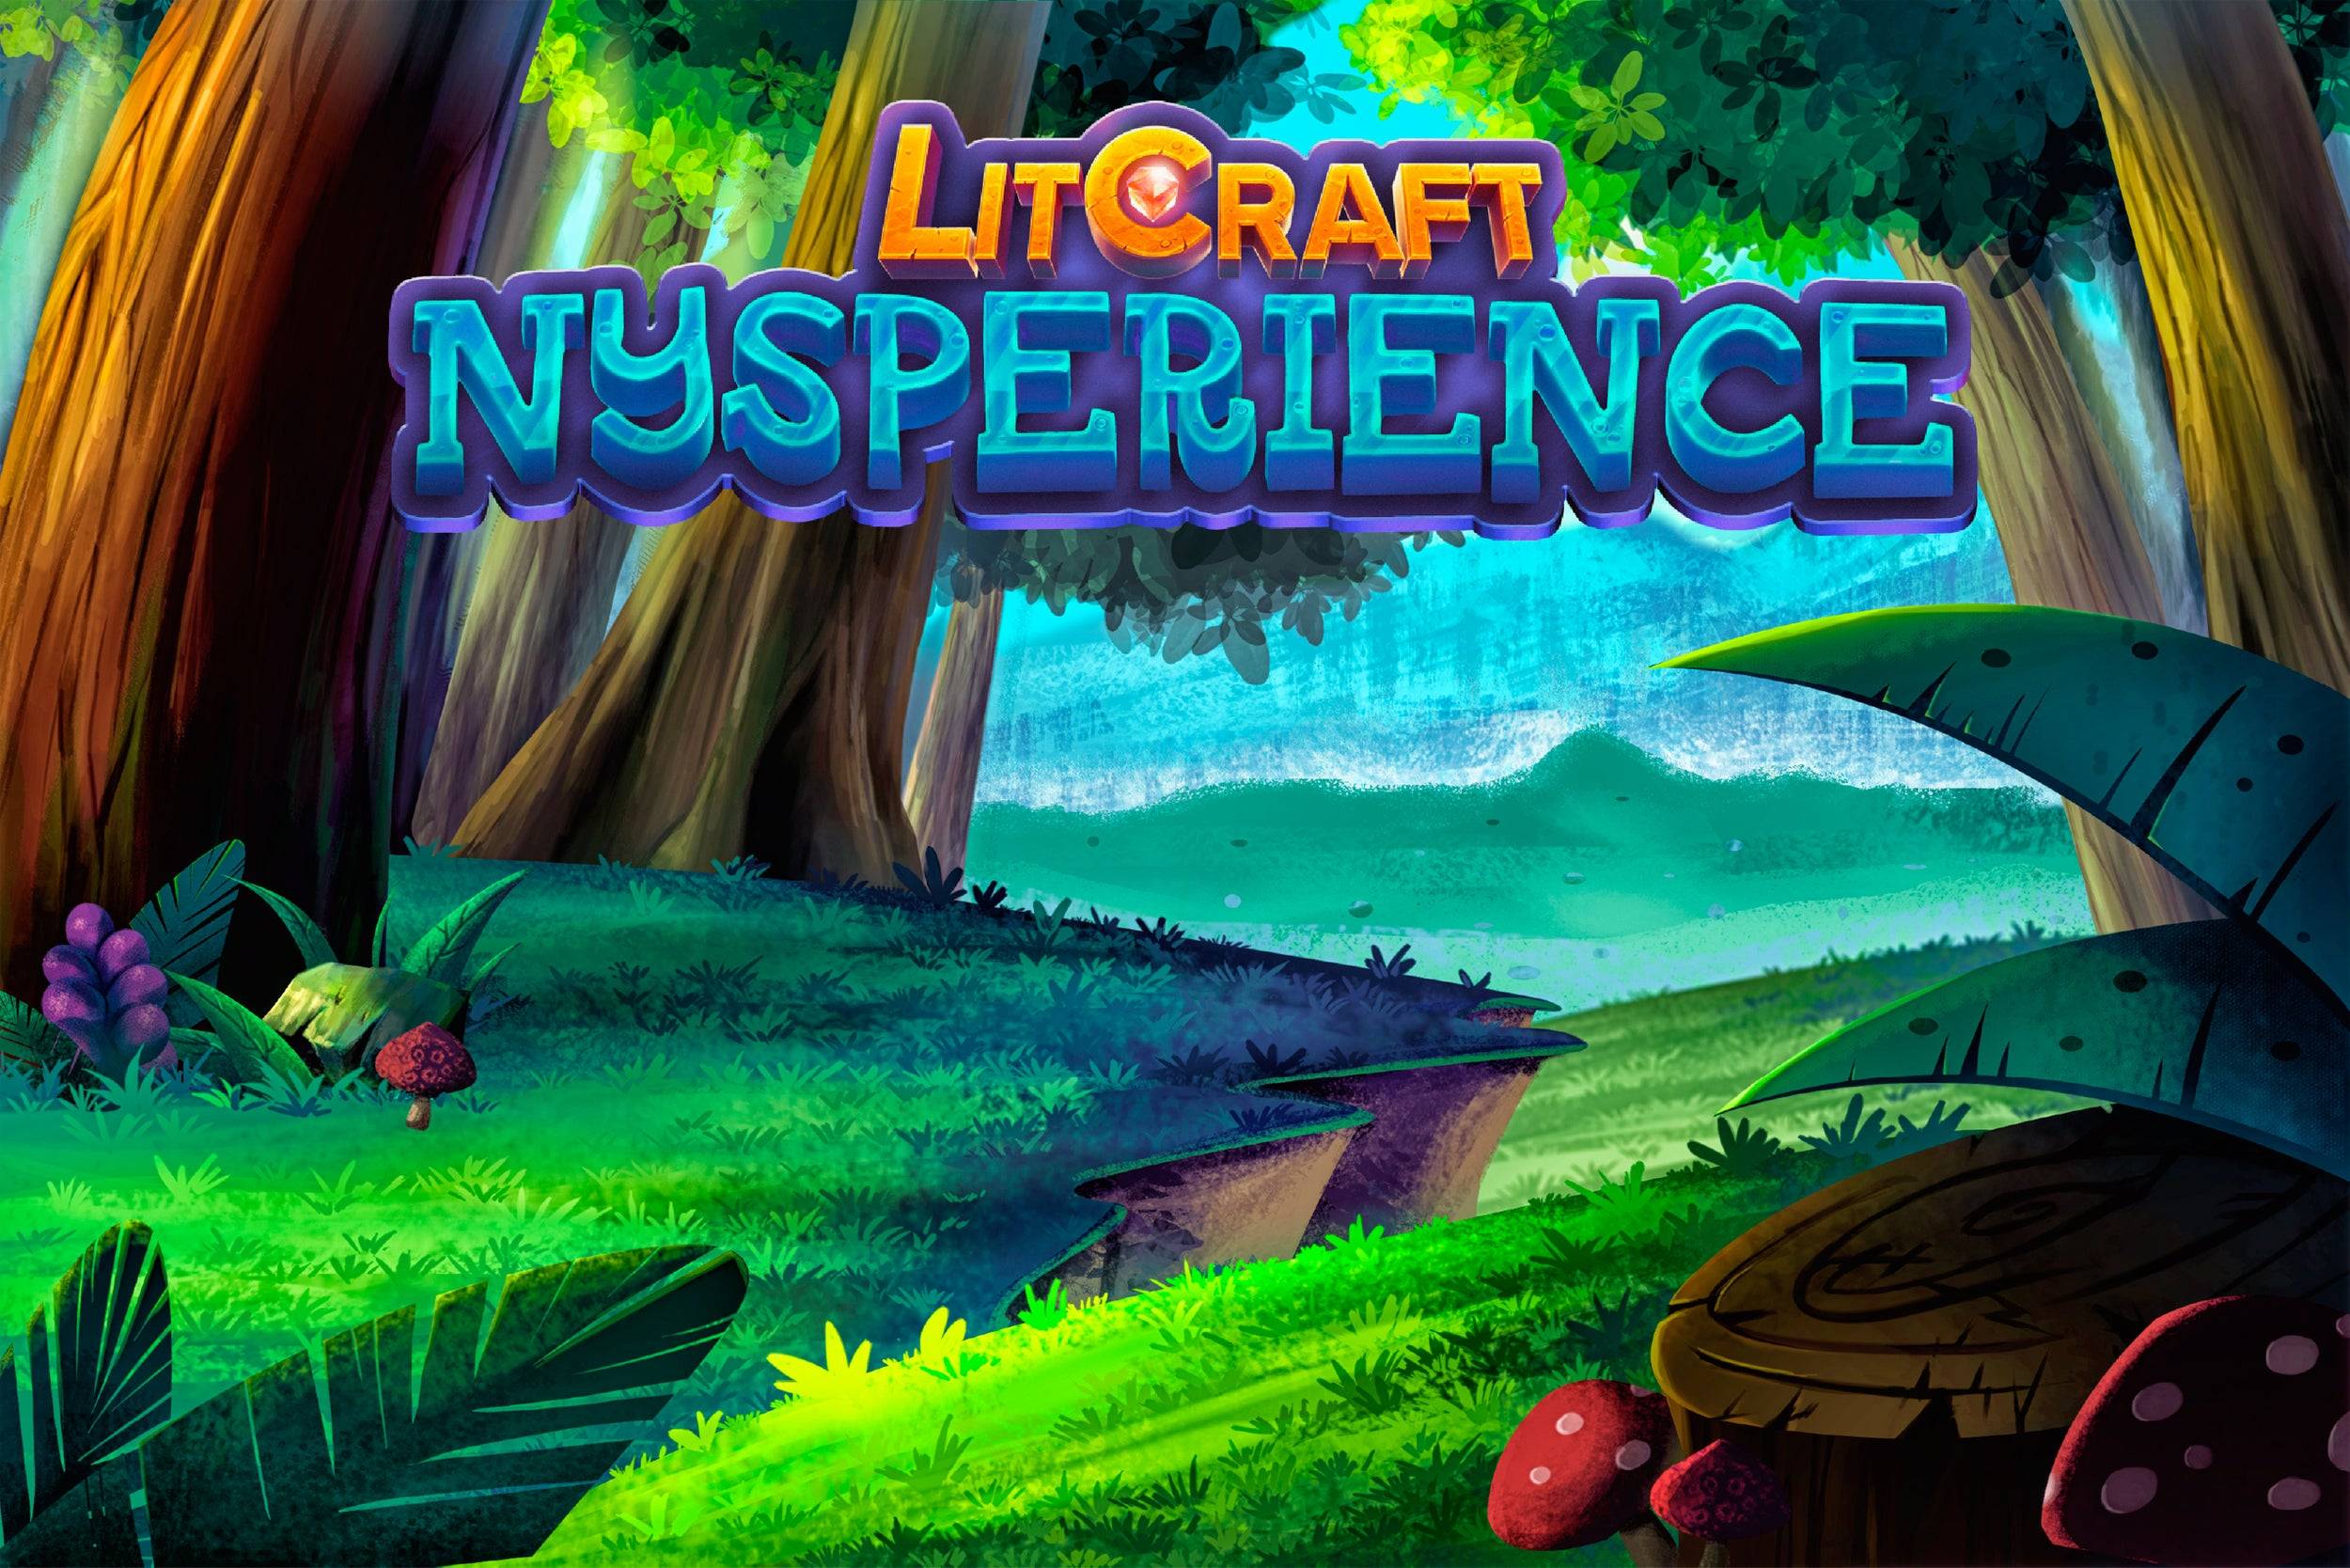 LitCraft: Nysperience - Spelrecensie